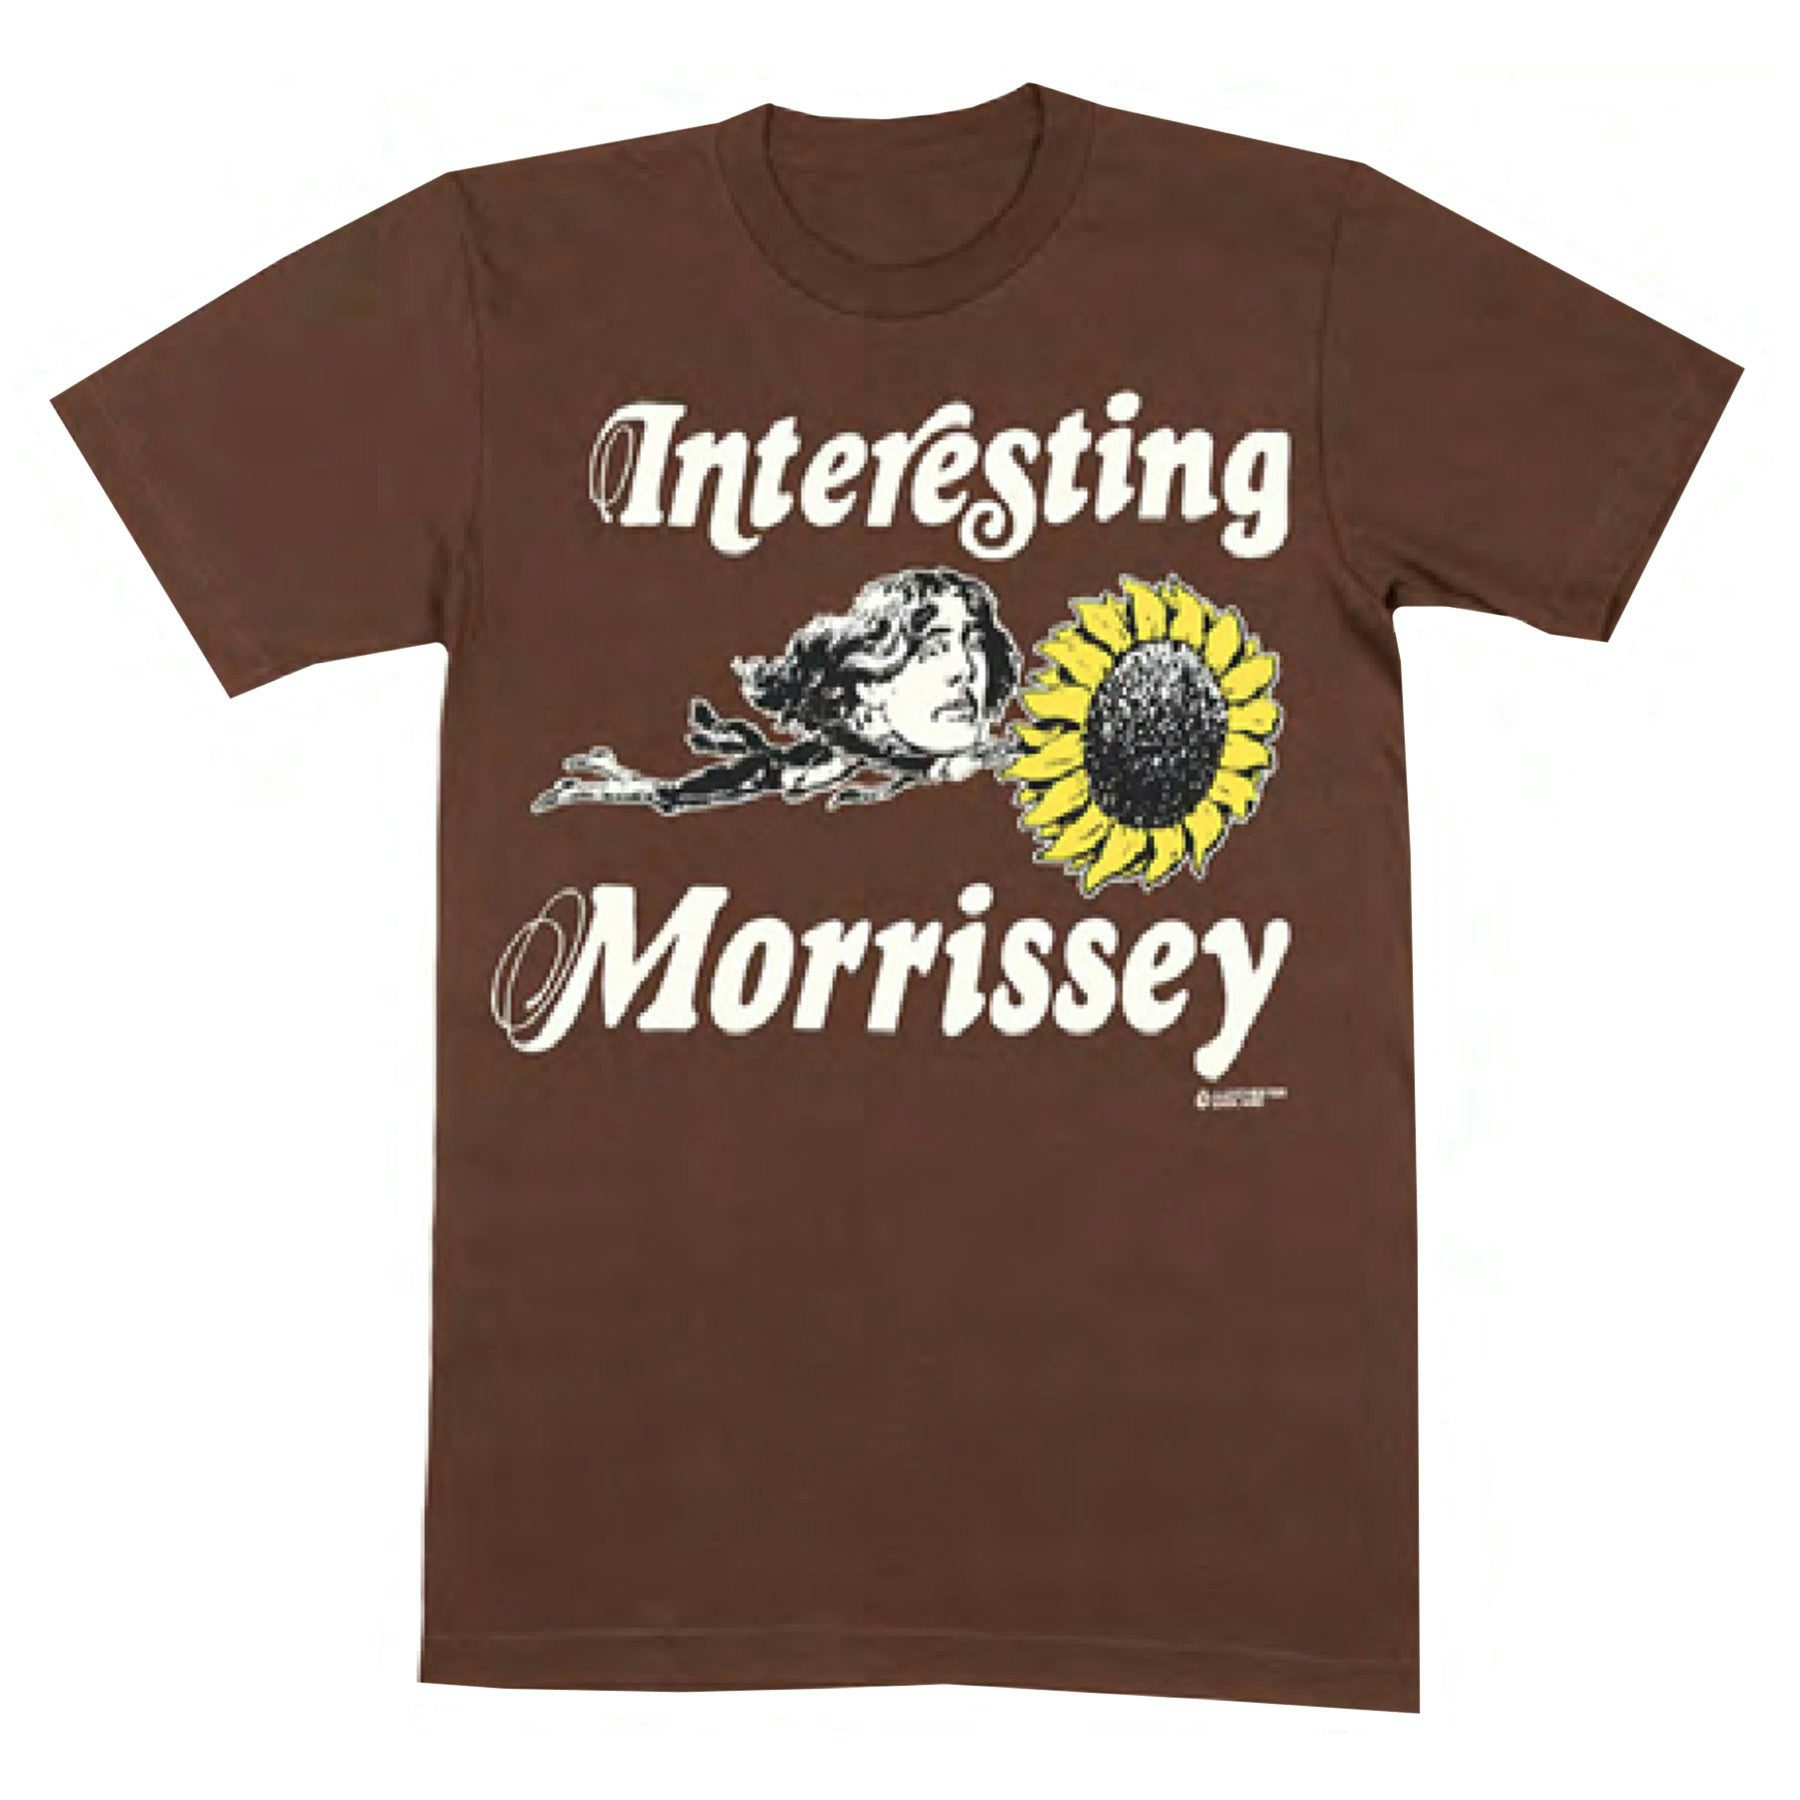 Interesting Morrissey' T-Shirt Brown